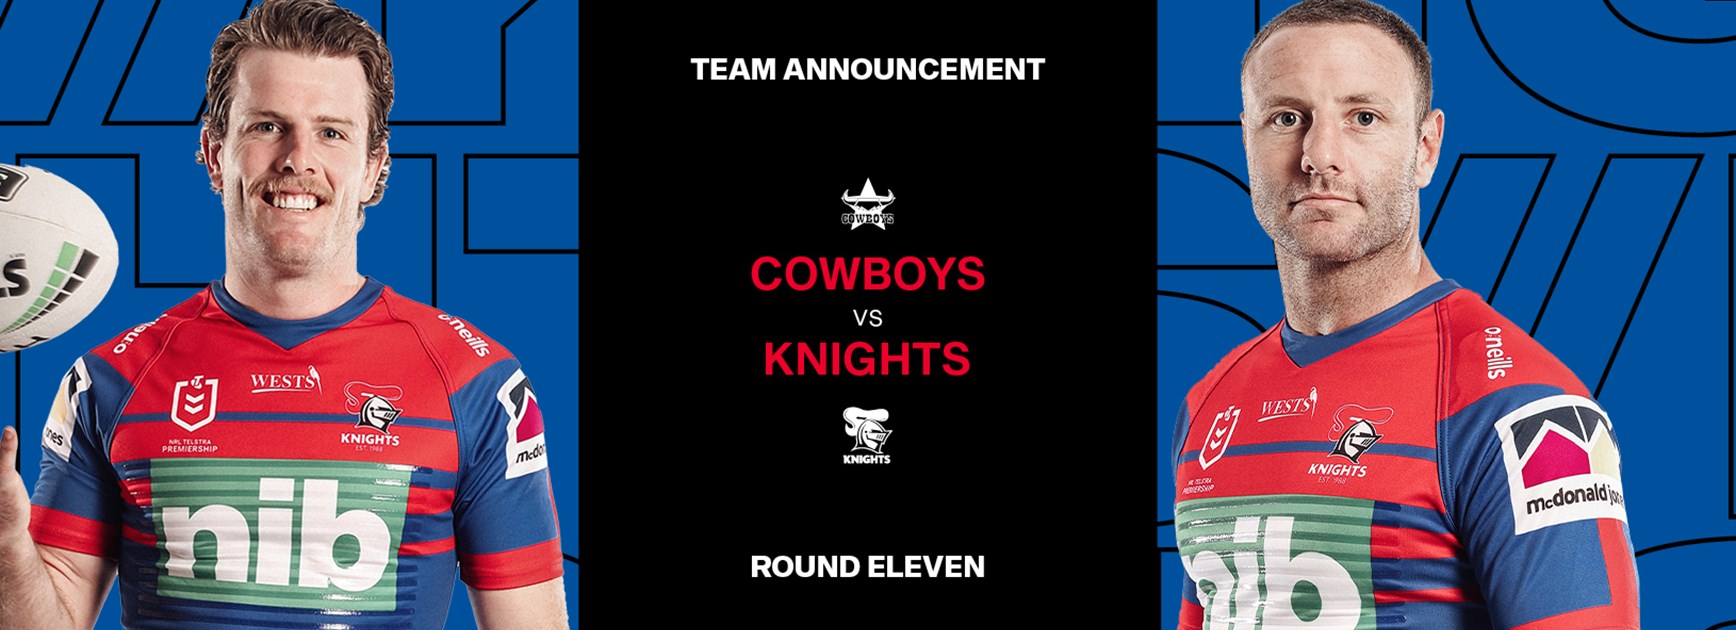 Knights v Cowboys Round 11 NRL team list